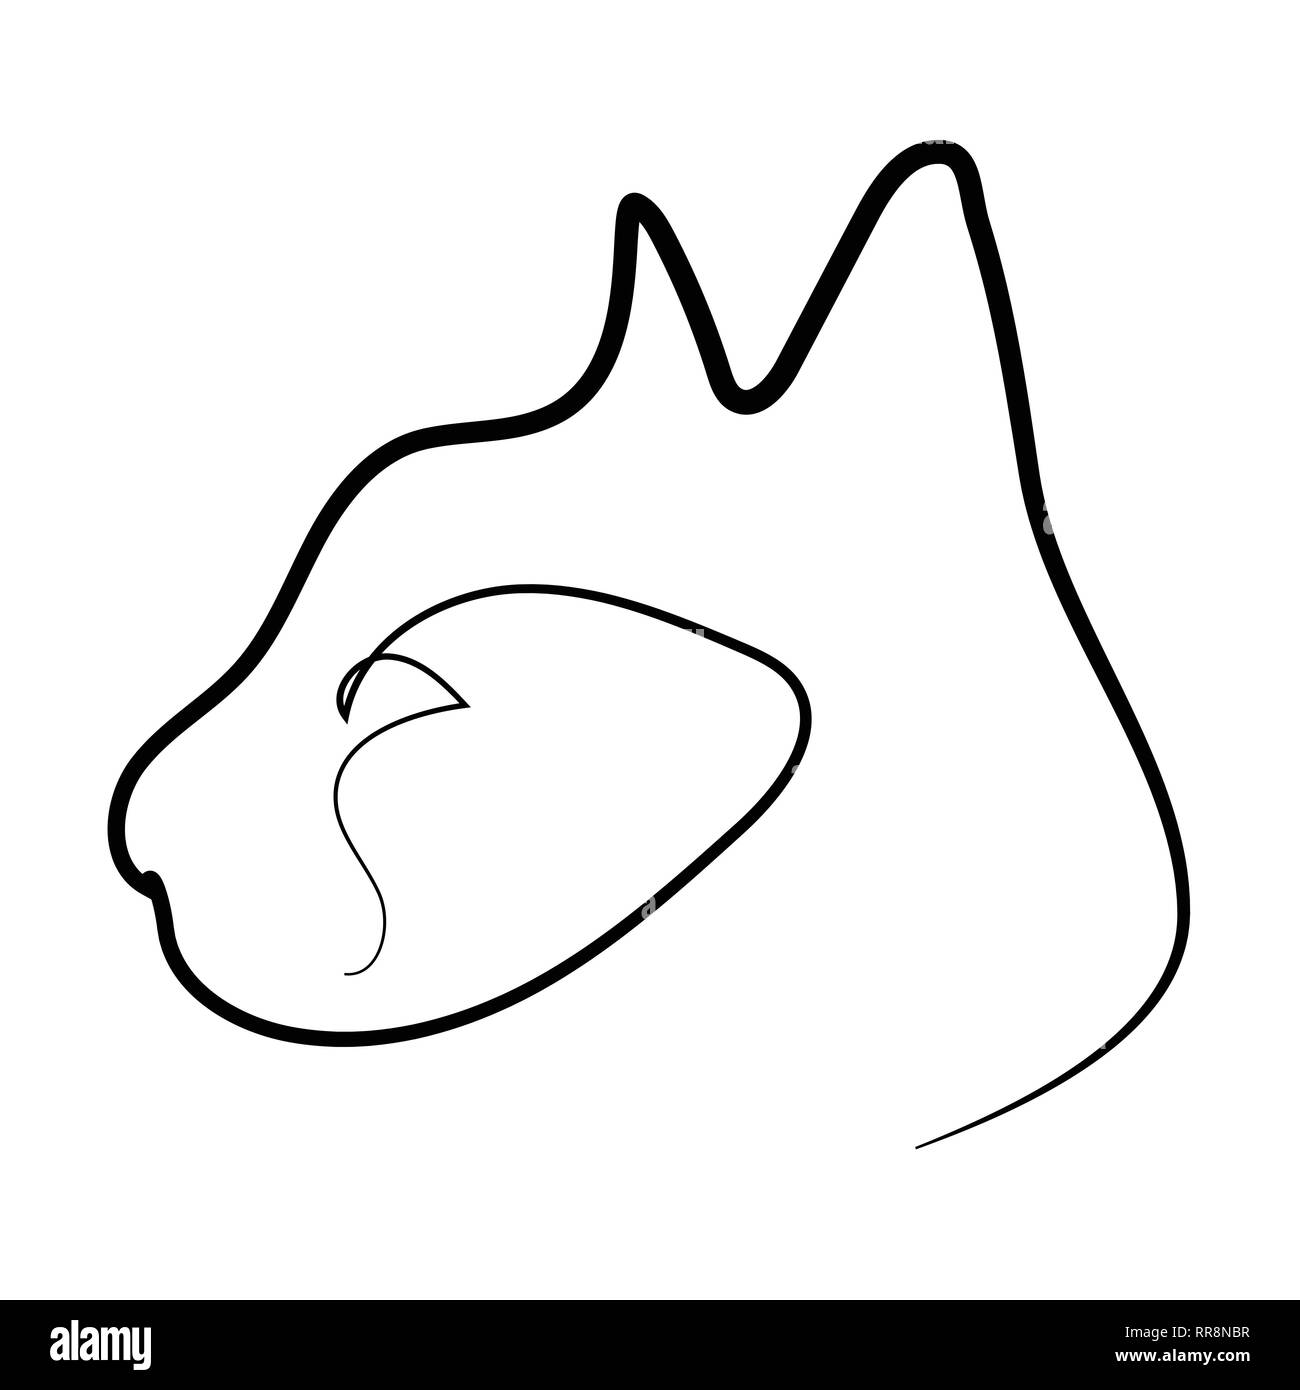 41 HQ Images Cat Text Art One Line / Continuation Line Cat Simply One Line Doodle 17 Design Clip Art Crella